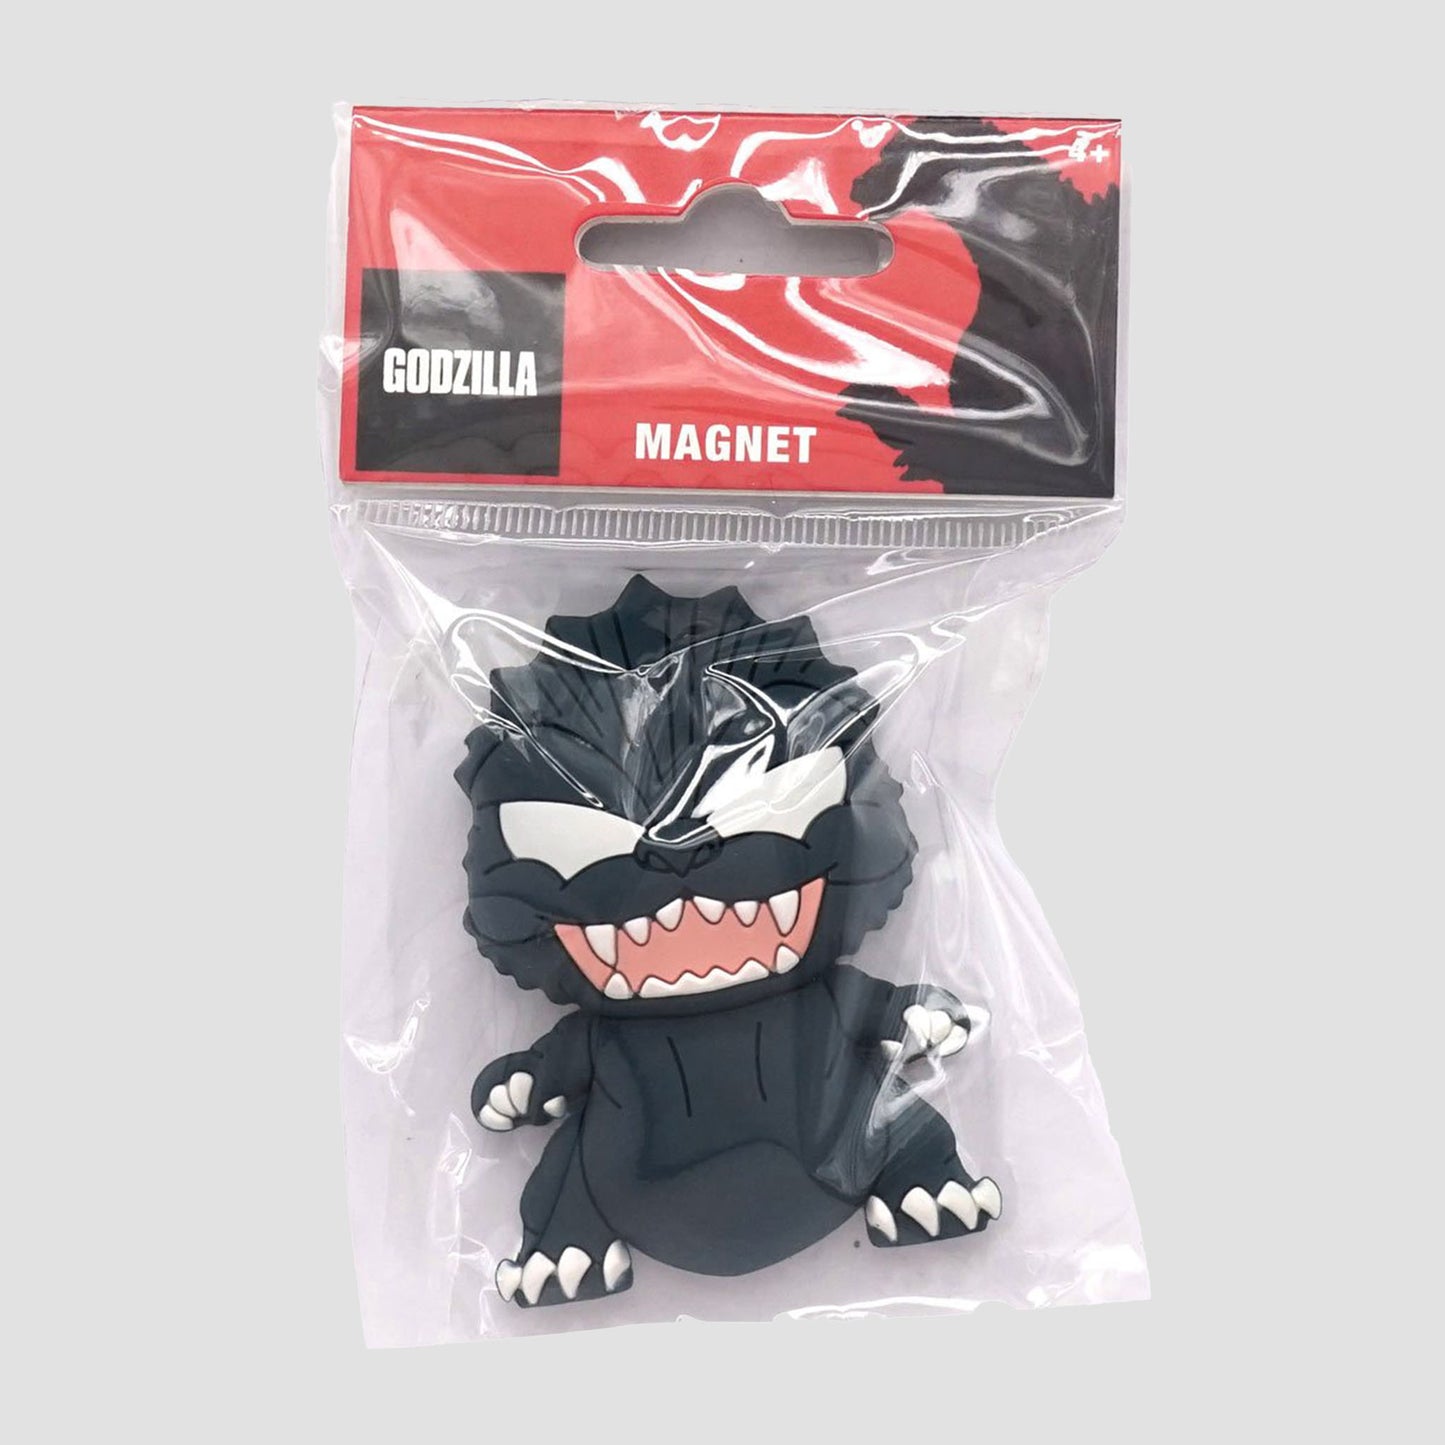 Godzilla (Angry) GMK 3D Foam Magnet